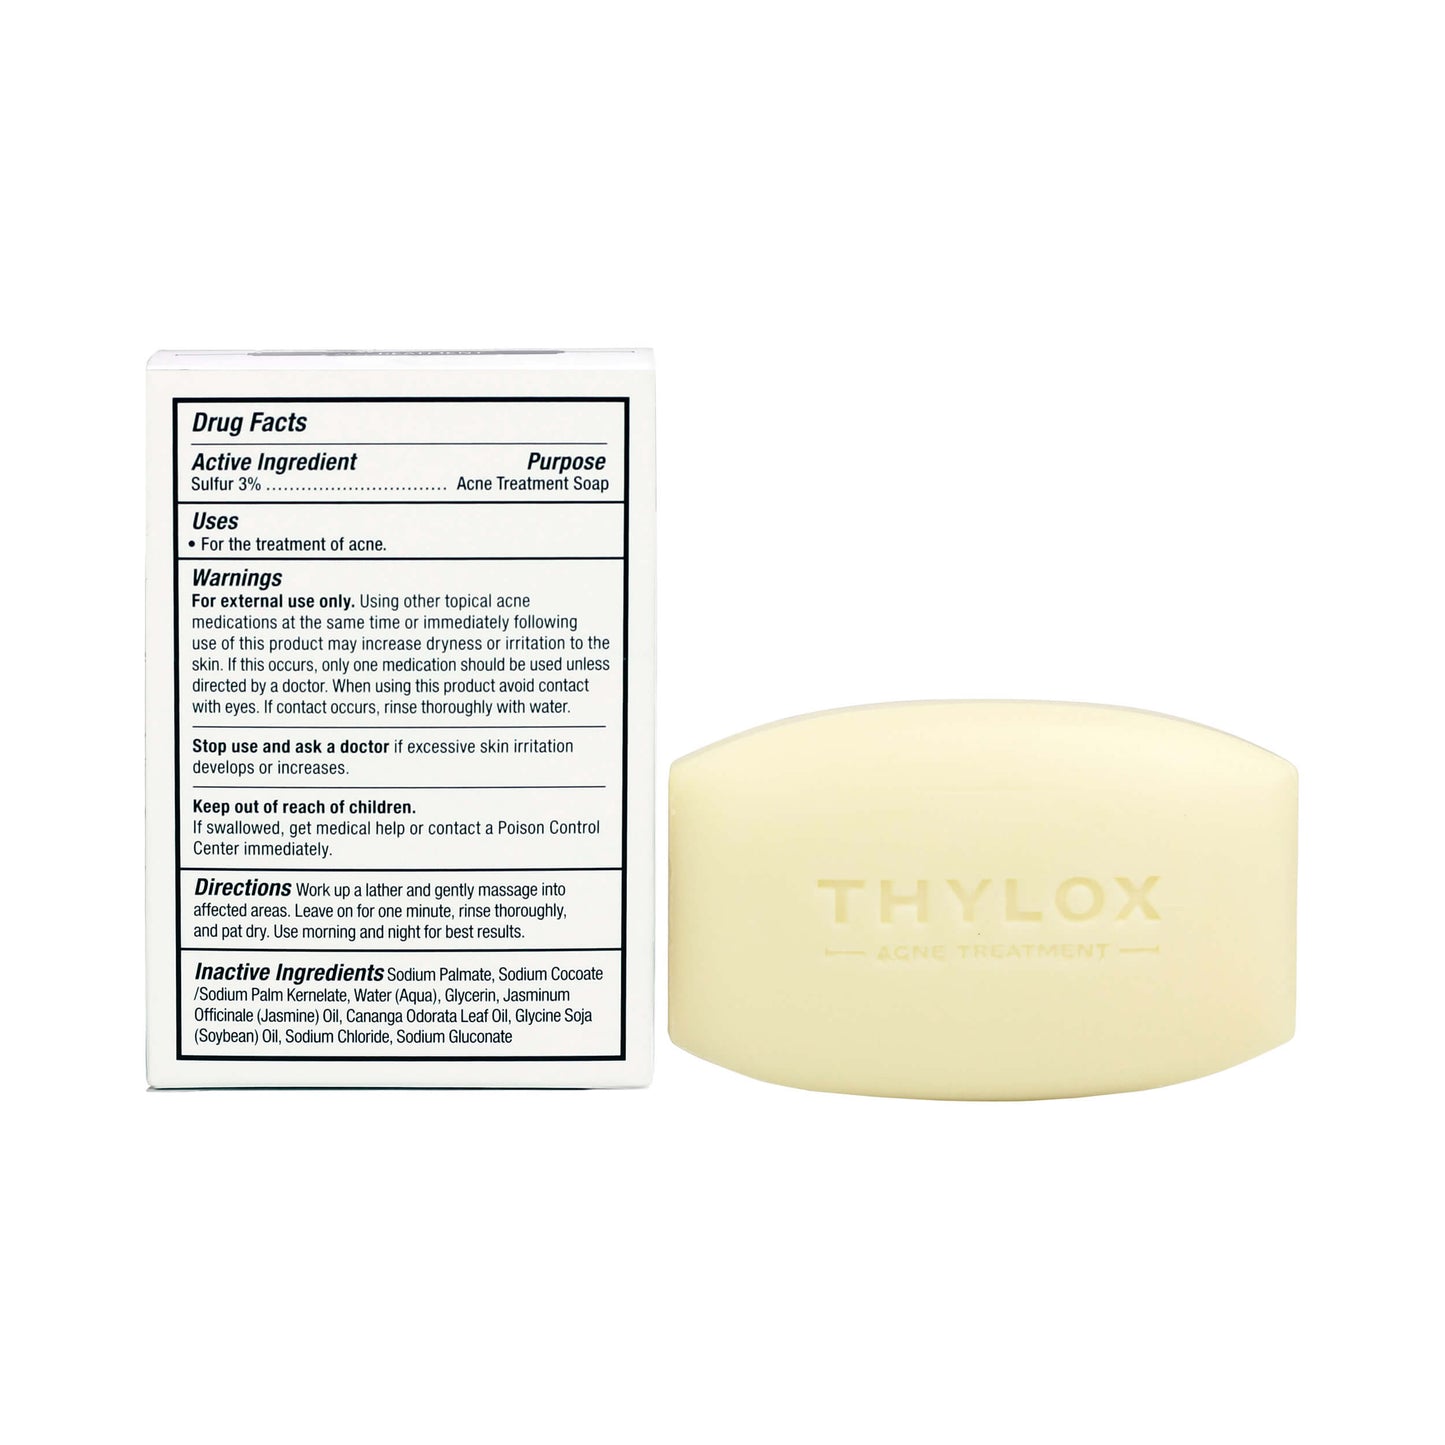 The Grandpa Soap Co Thylox Bar Soap Acne Treatment 3.25 oz (92g)